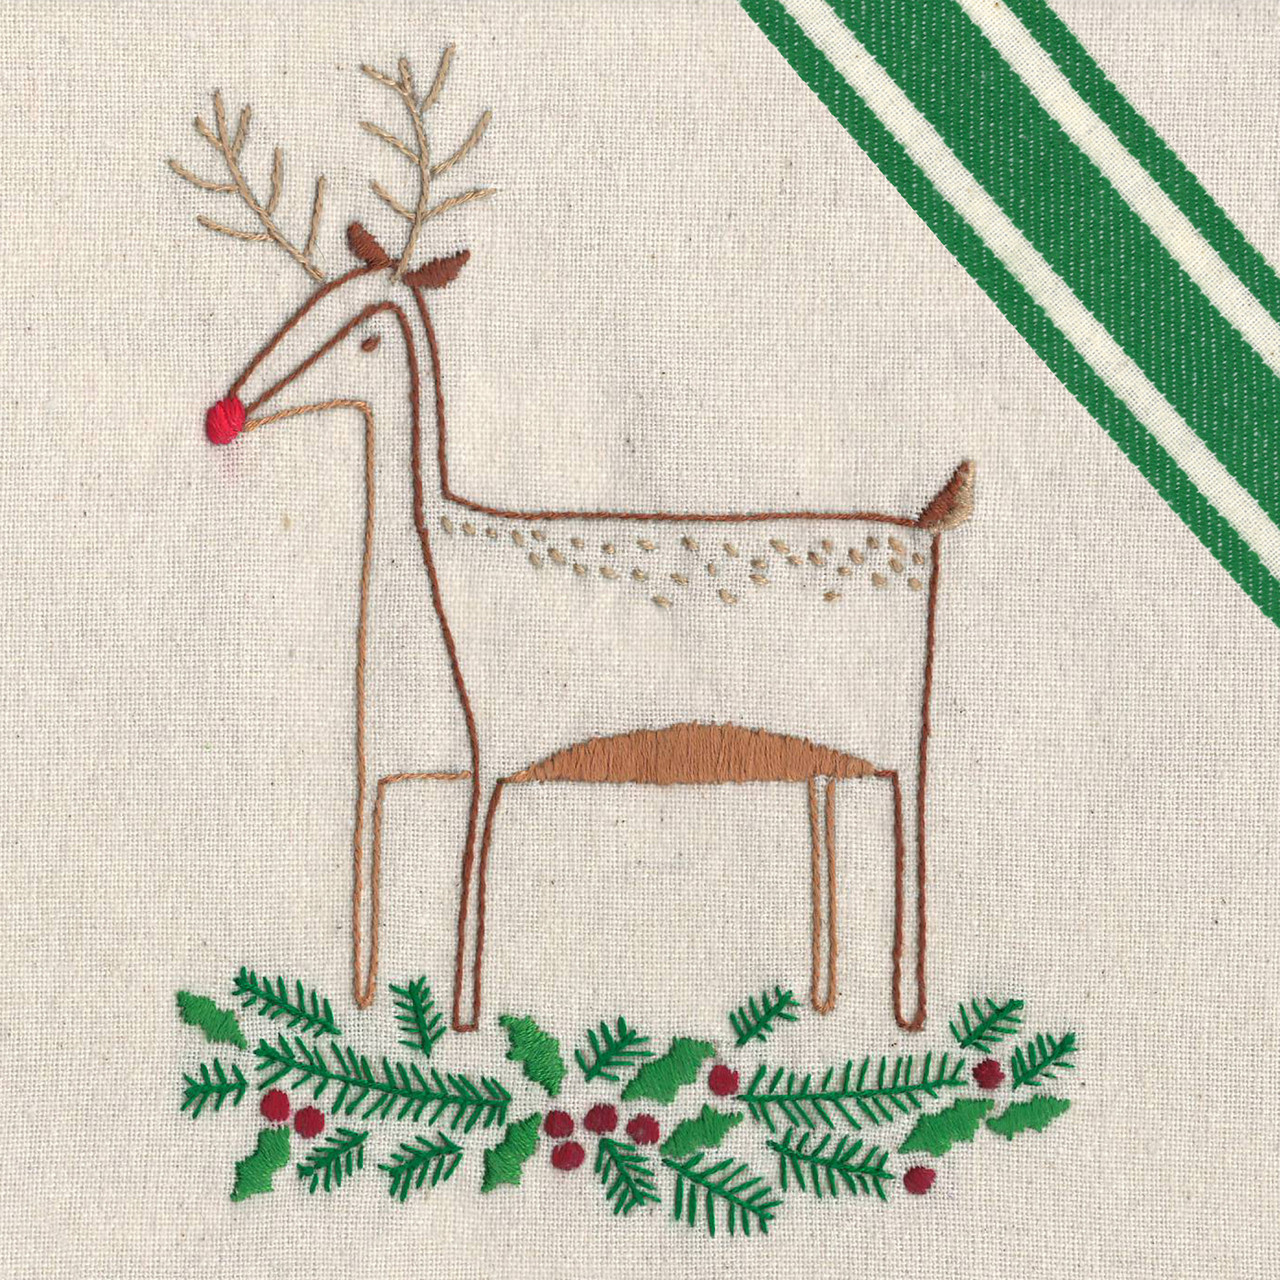 Winter Wonderland - Hand Stitch Embroidery Transfer Pattern